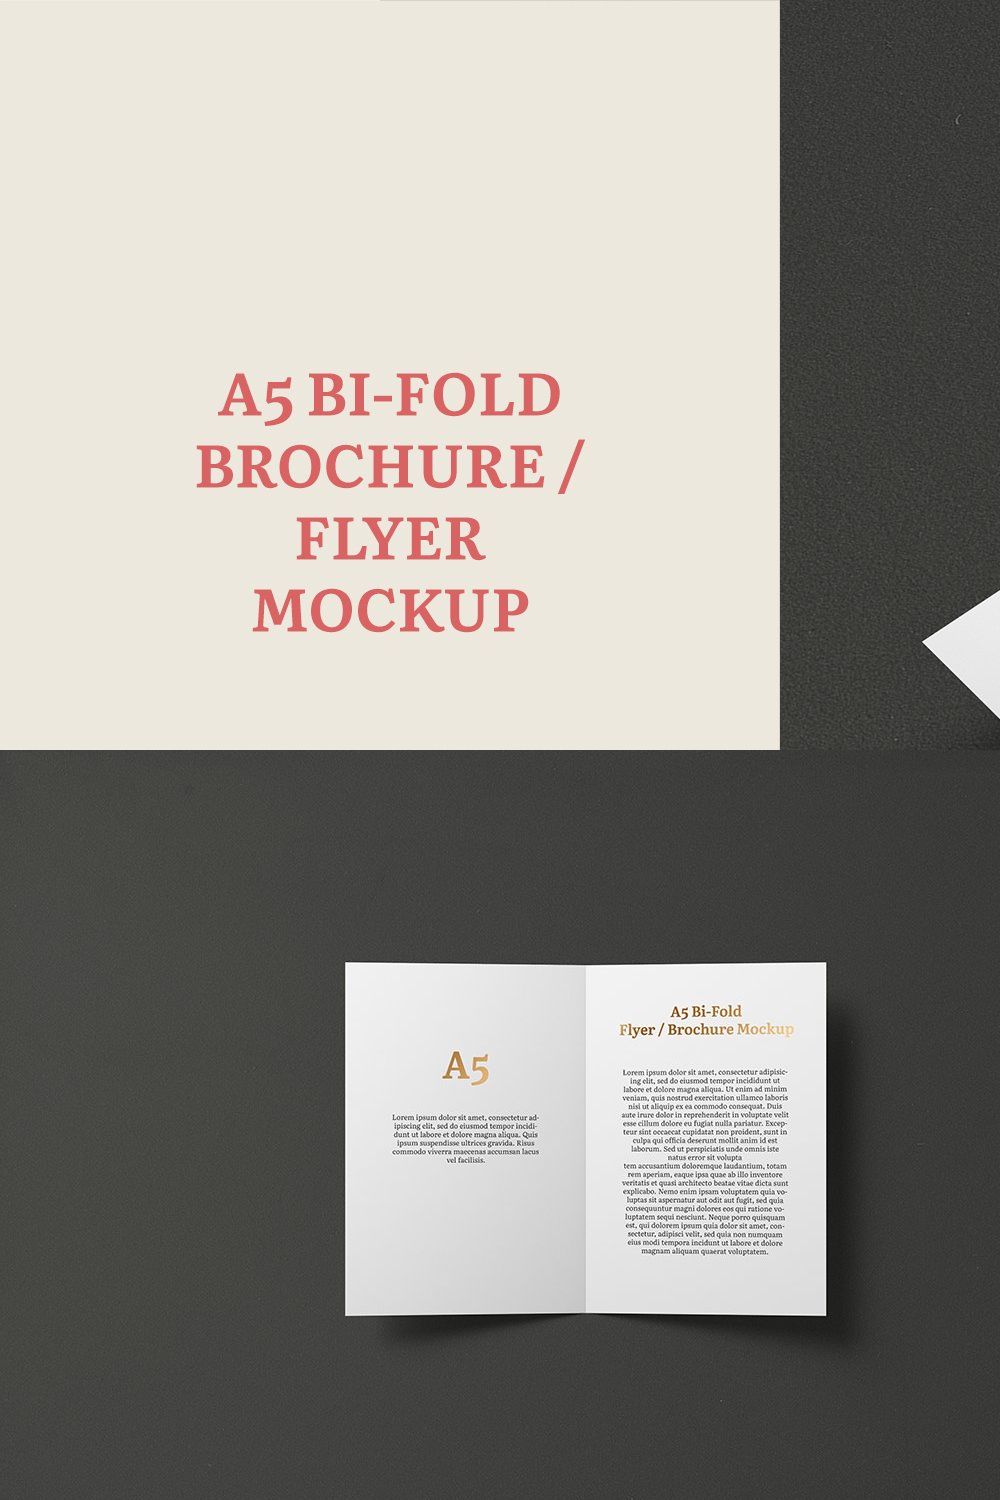 A5 Bi-Fold Brochure / Flyer Mockup pinterest preview image.